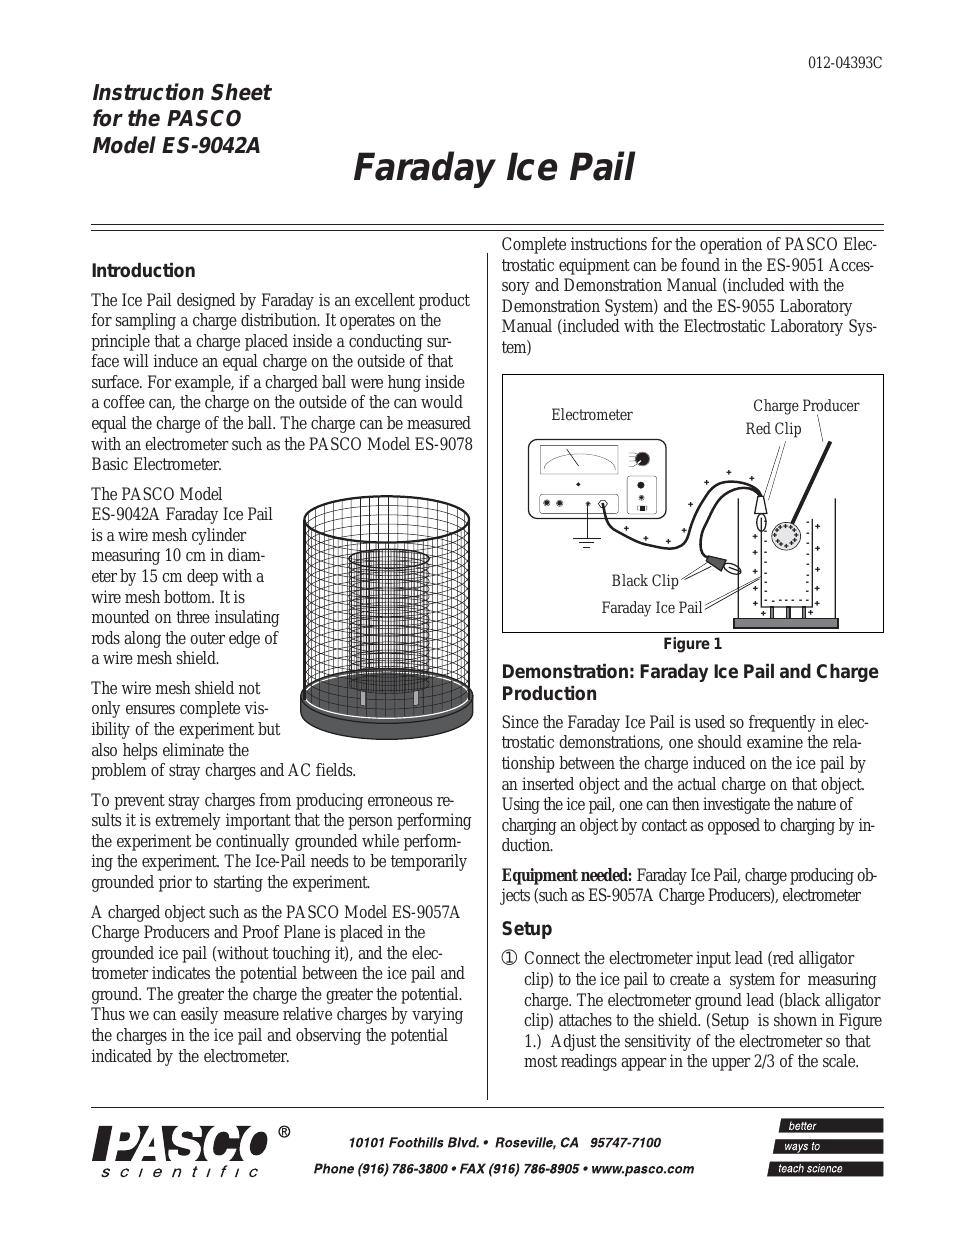 ES-9042A Faraday Ice Pail